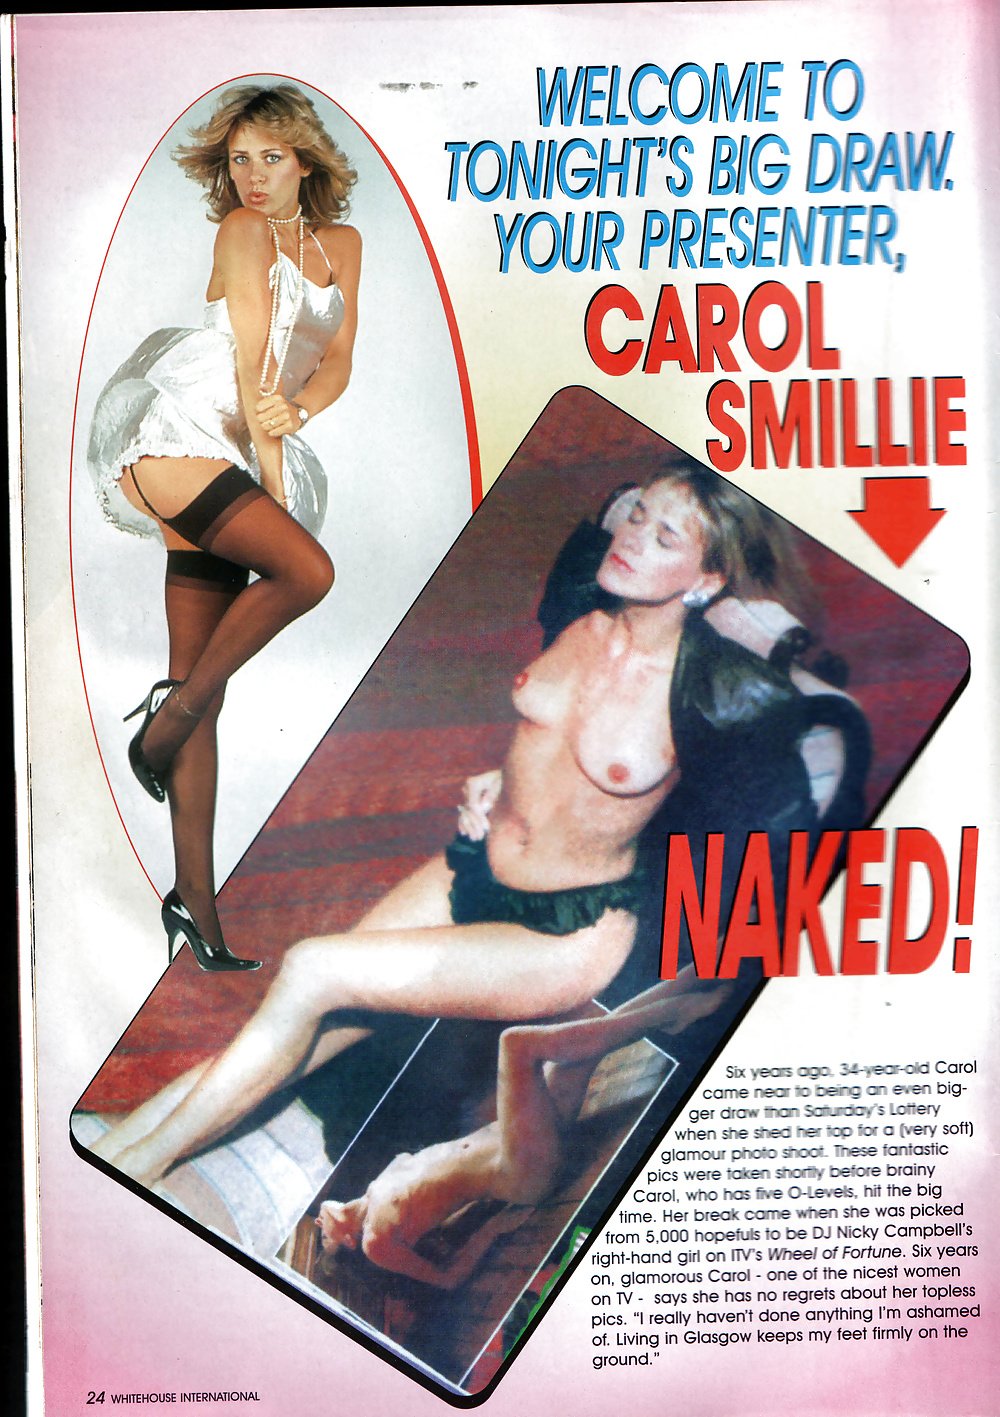 Carol smiley naked